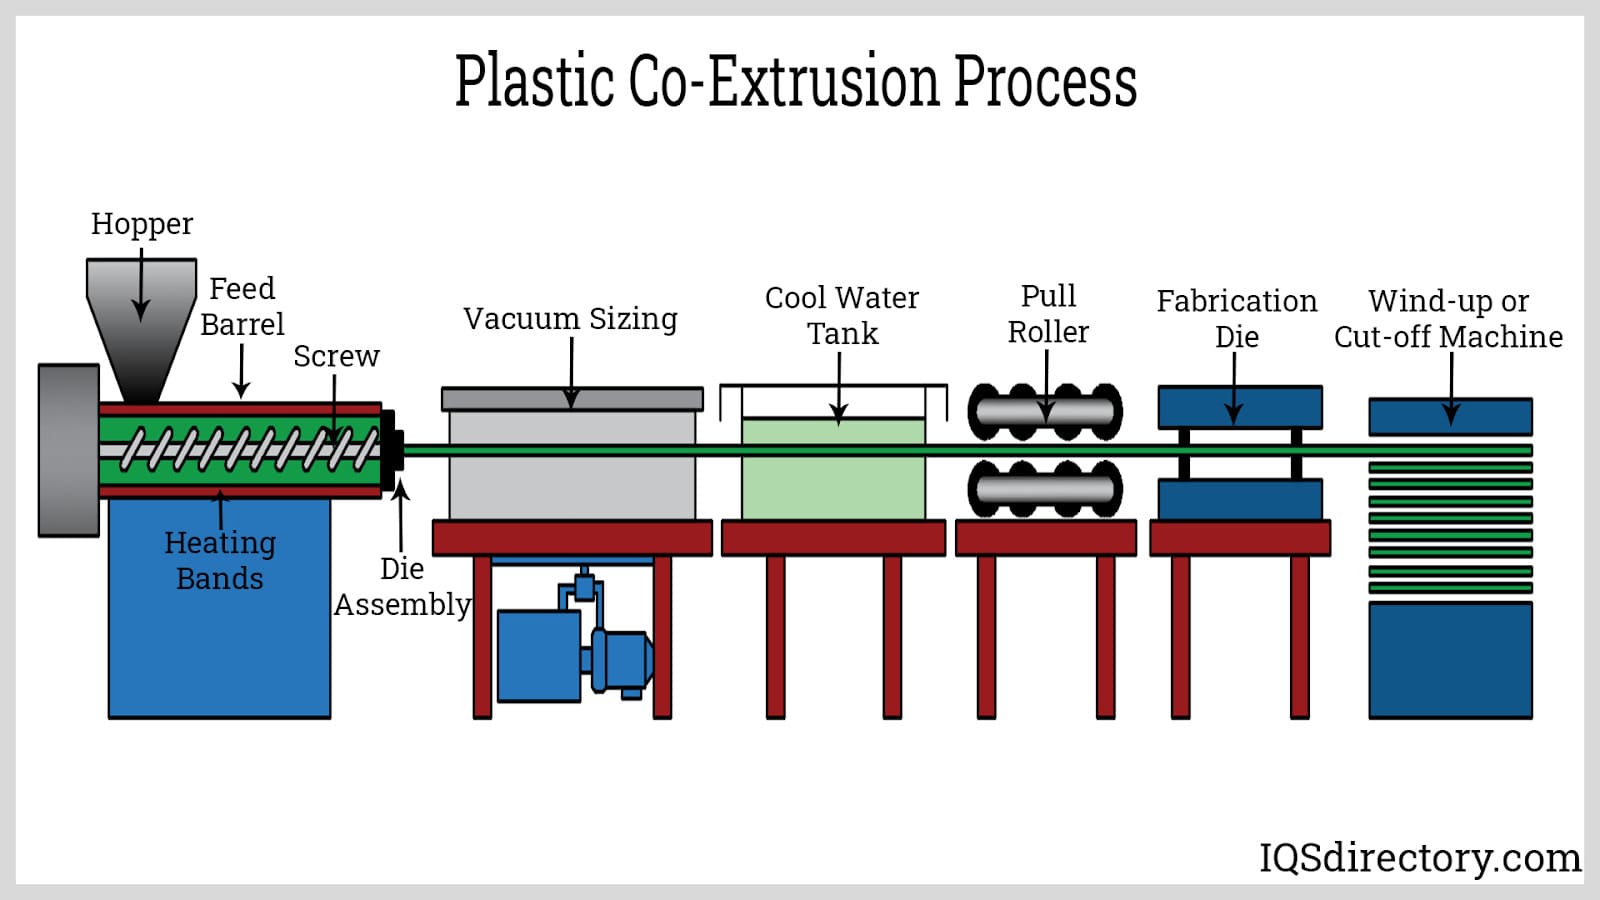 Plastic Co-Extrusion Process